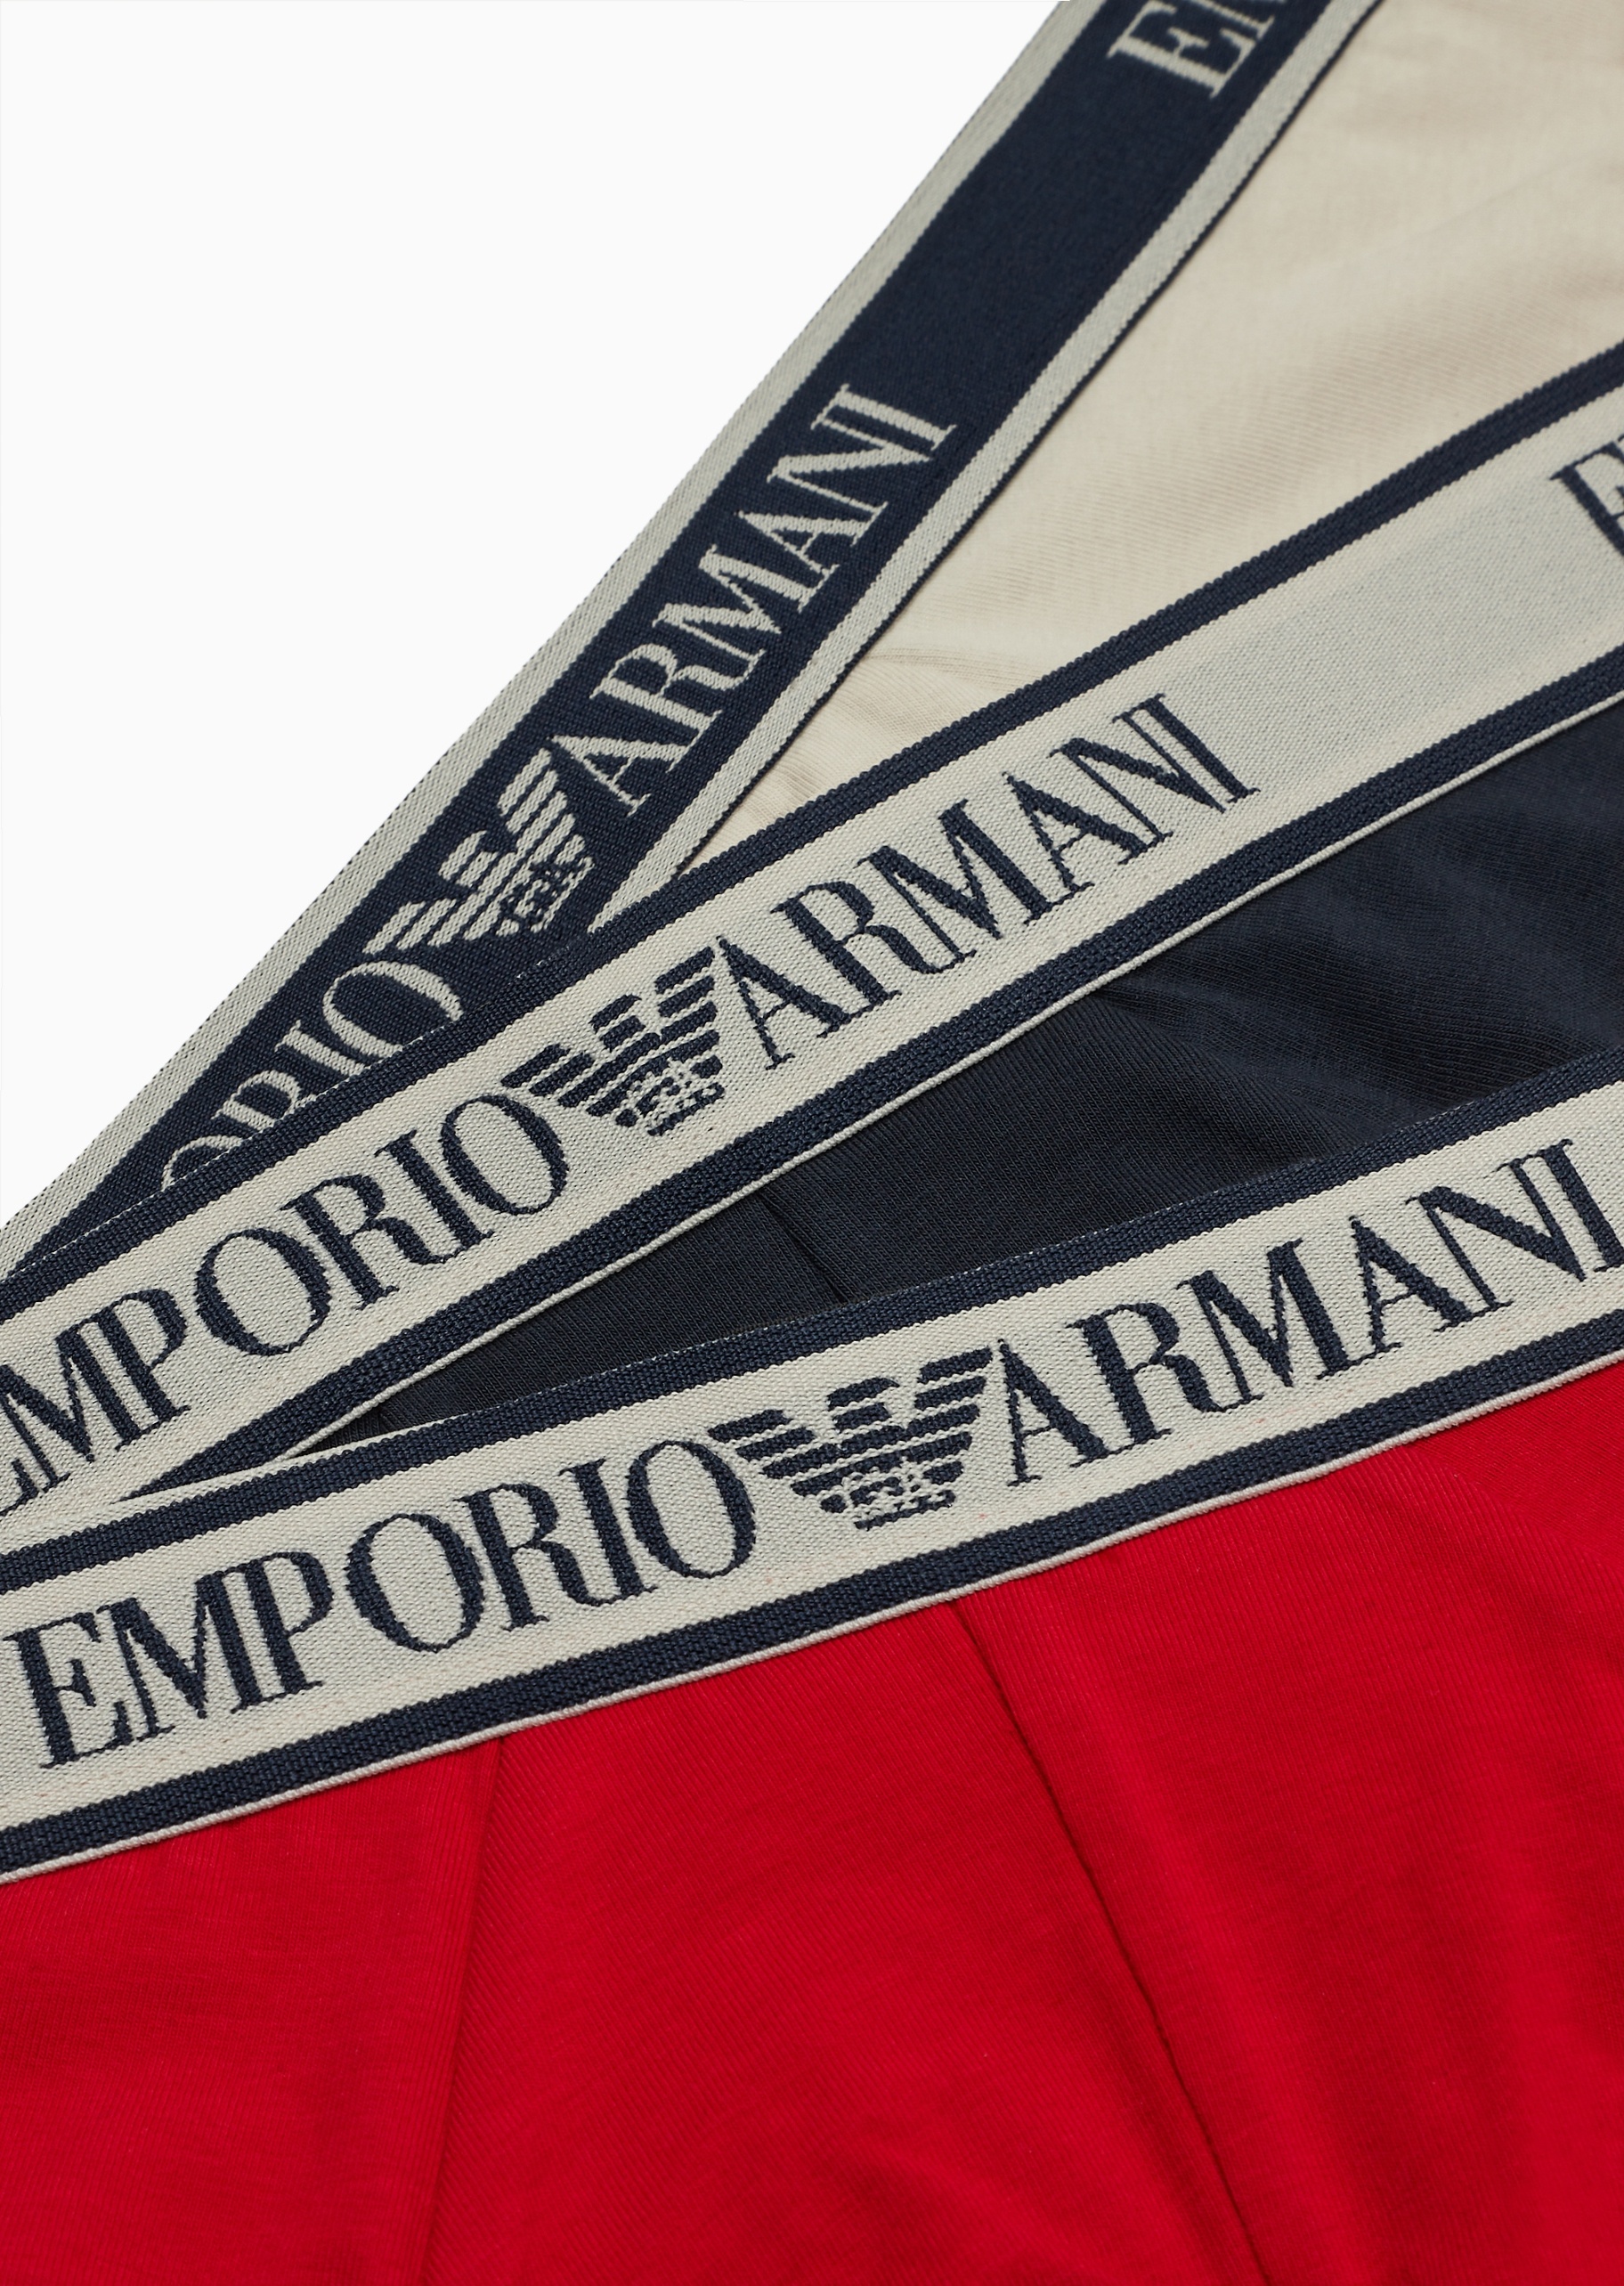 Emporio Armani 男士纯棉微弹修身三角三条装内裤套装